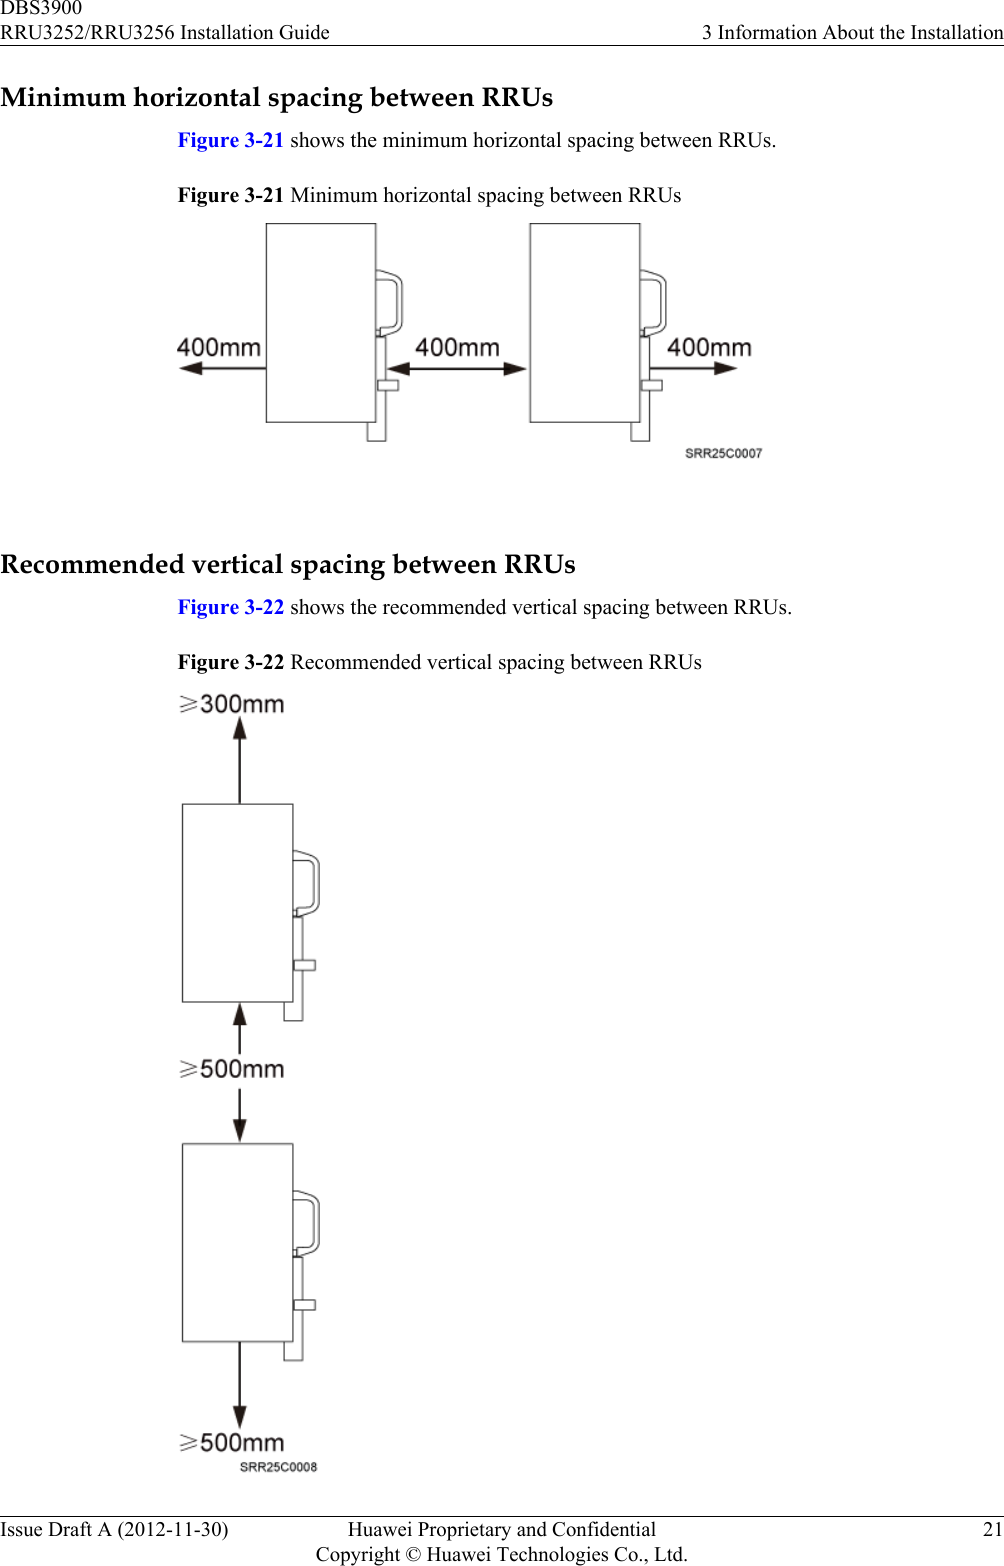 Minimum horizontal spacing between RRUsFigure 3-21 shows the minimum horizontal spacing between RRUs.Figure 3-21 Minimum horizontal spacing between RRUs Recommended vertical spacing between RRUsFigure 3-22 shows the recommended vertical spacing between RRUs.Figure 3-22 Recommended vertical spacing between RRUsDBS3900RRU3252/RRU3256 Installation Guide 3 Information About the InstallationIssue Draft A (2012-11-30) Huawei Proprietary and ConfidentialCopyright © Huawei Technologies Co., Ltd.21